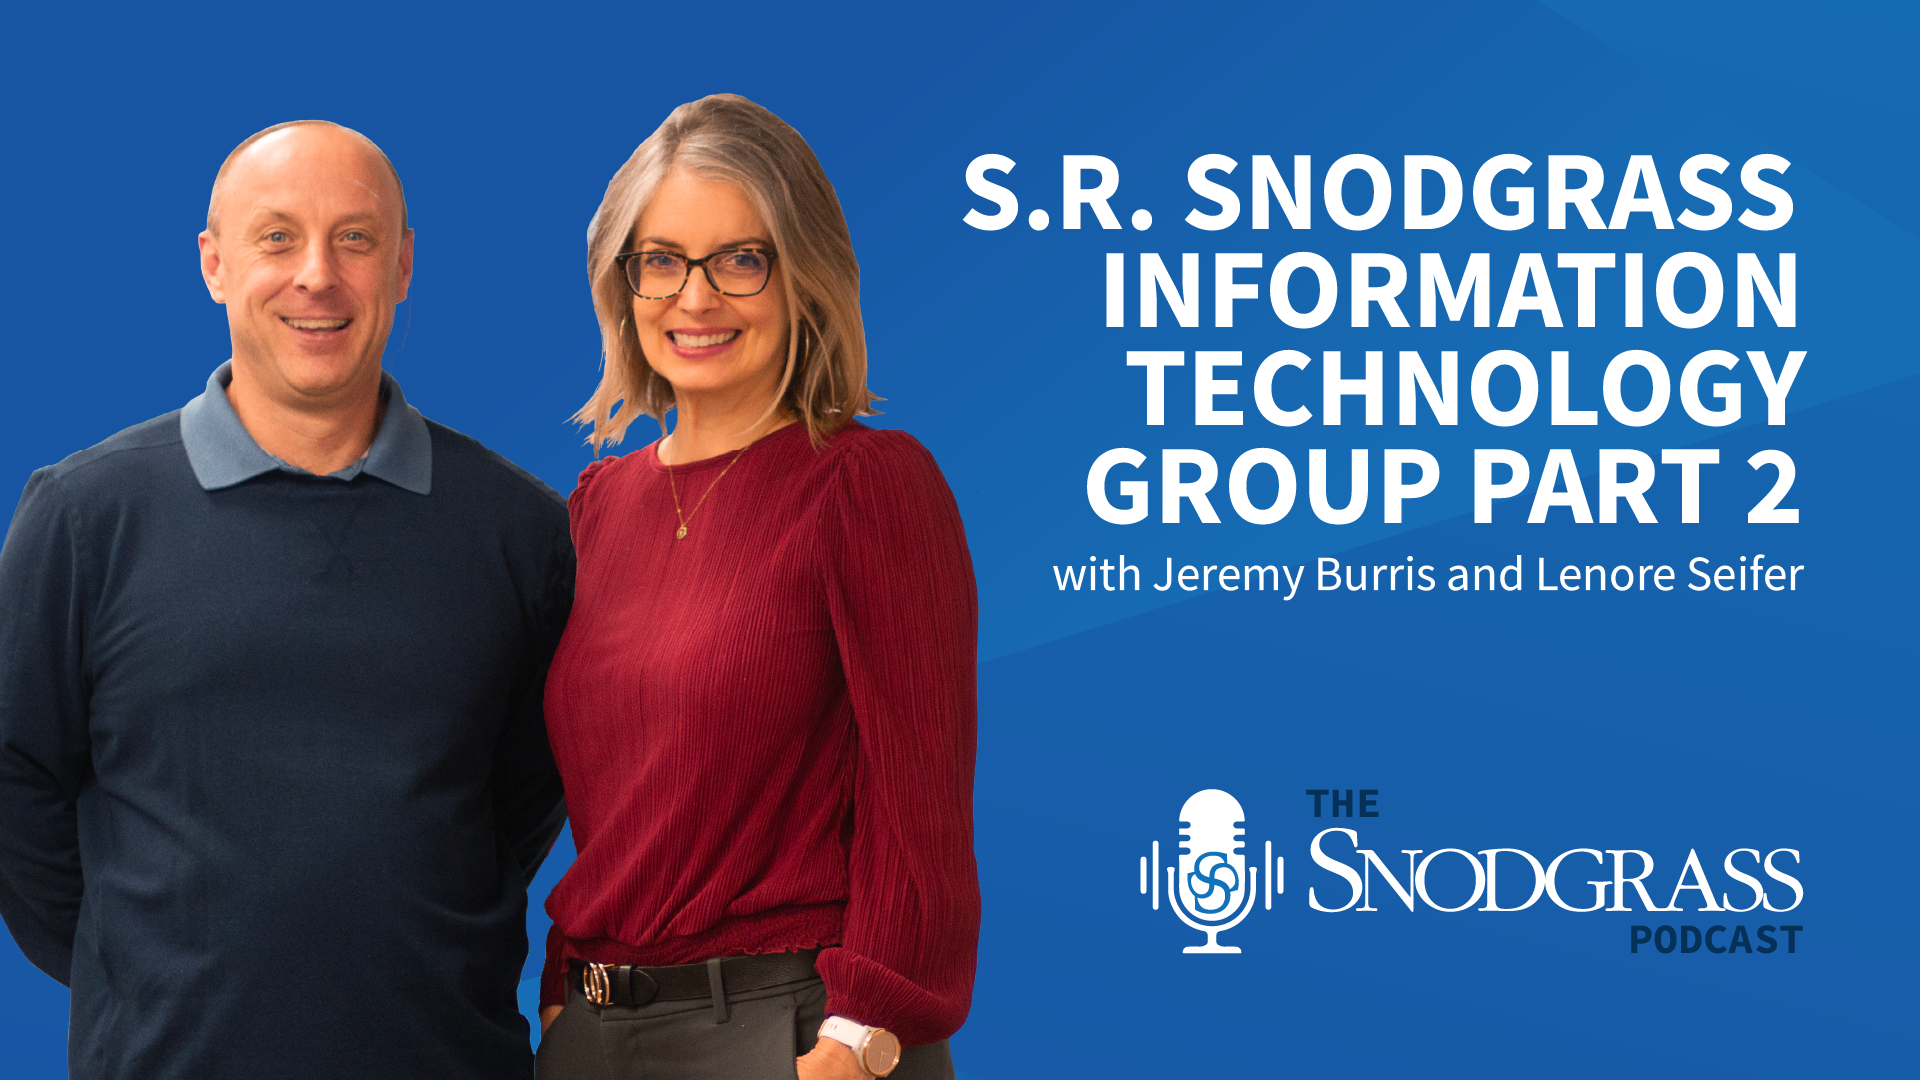 S.R. Snodgrass Information Technology Group Part 2 | S.R. Snodgrass Podcast Episode 8